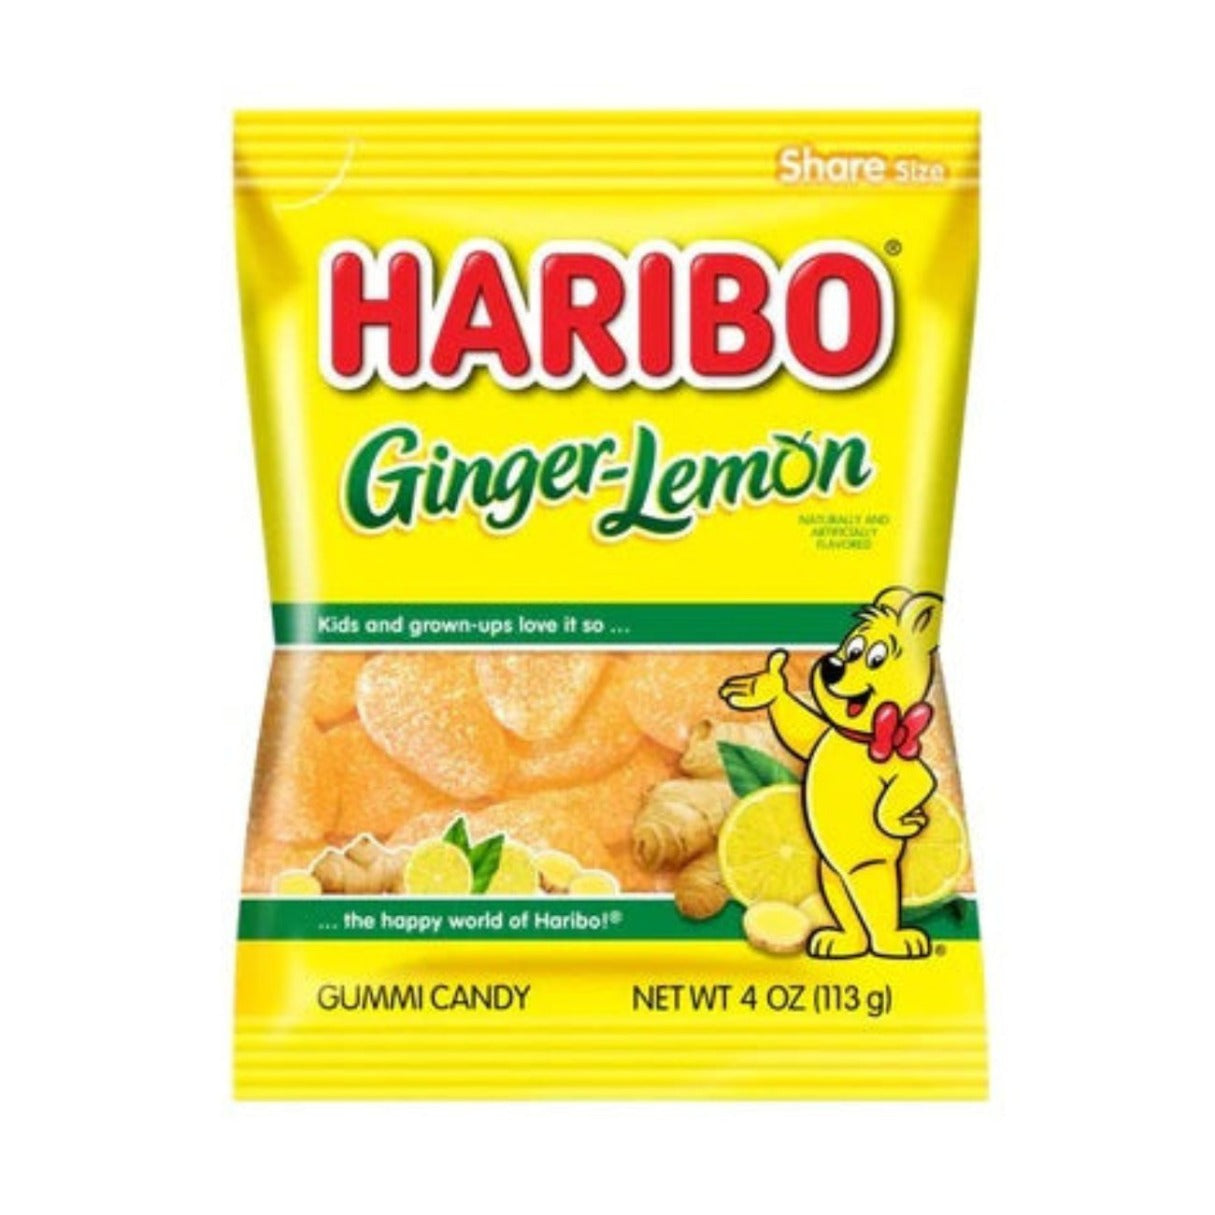 Haribo Ginger Lemon Gummi Candy 4oz -12ct